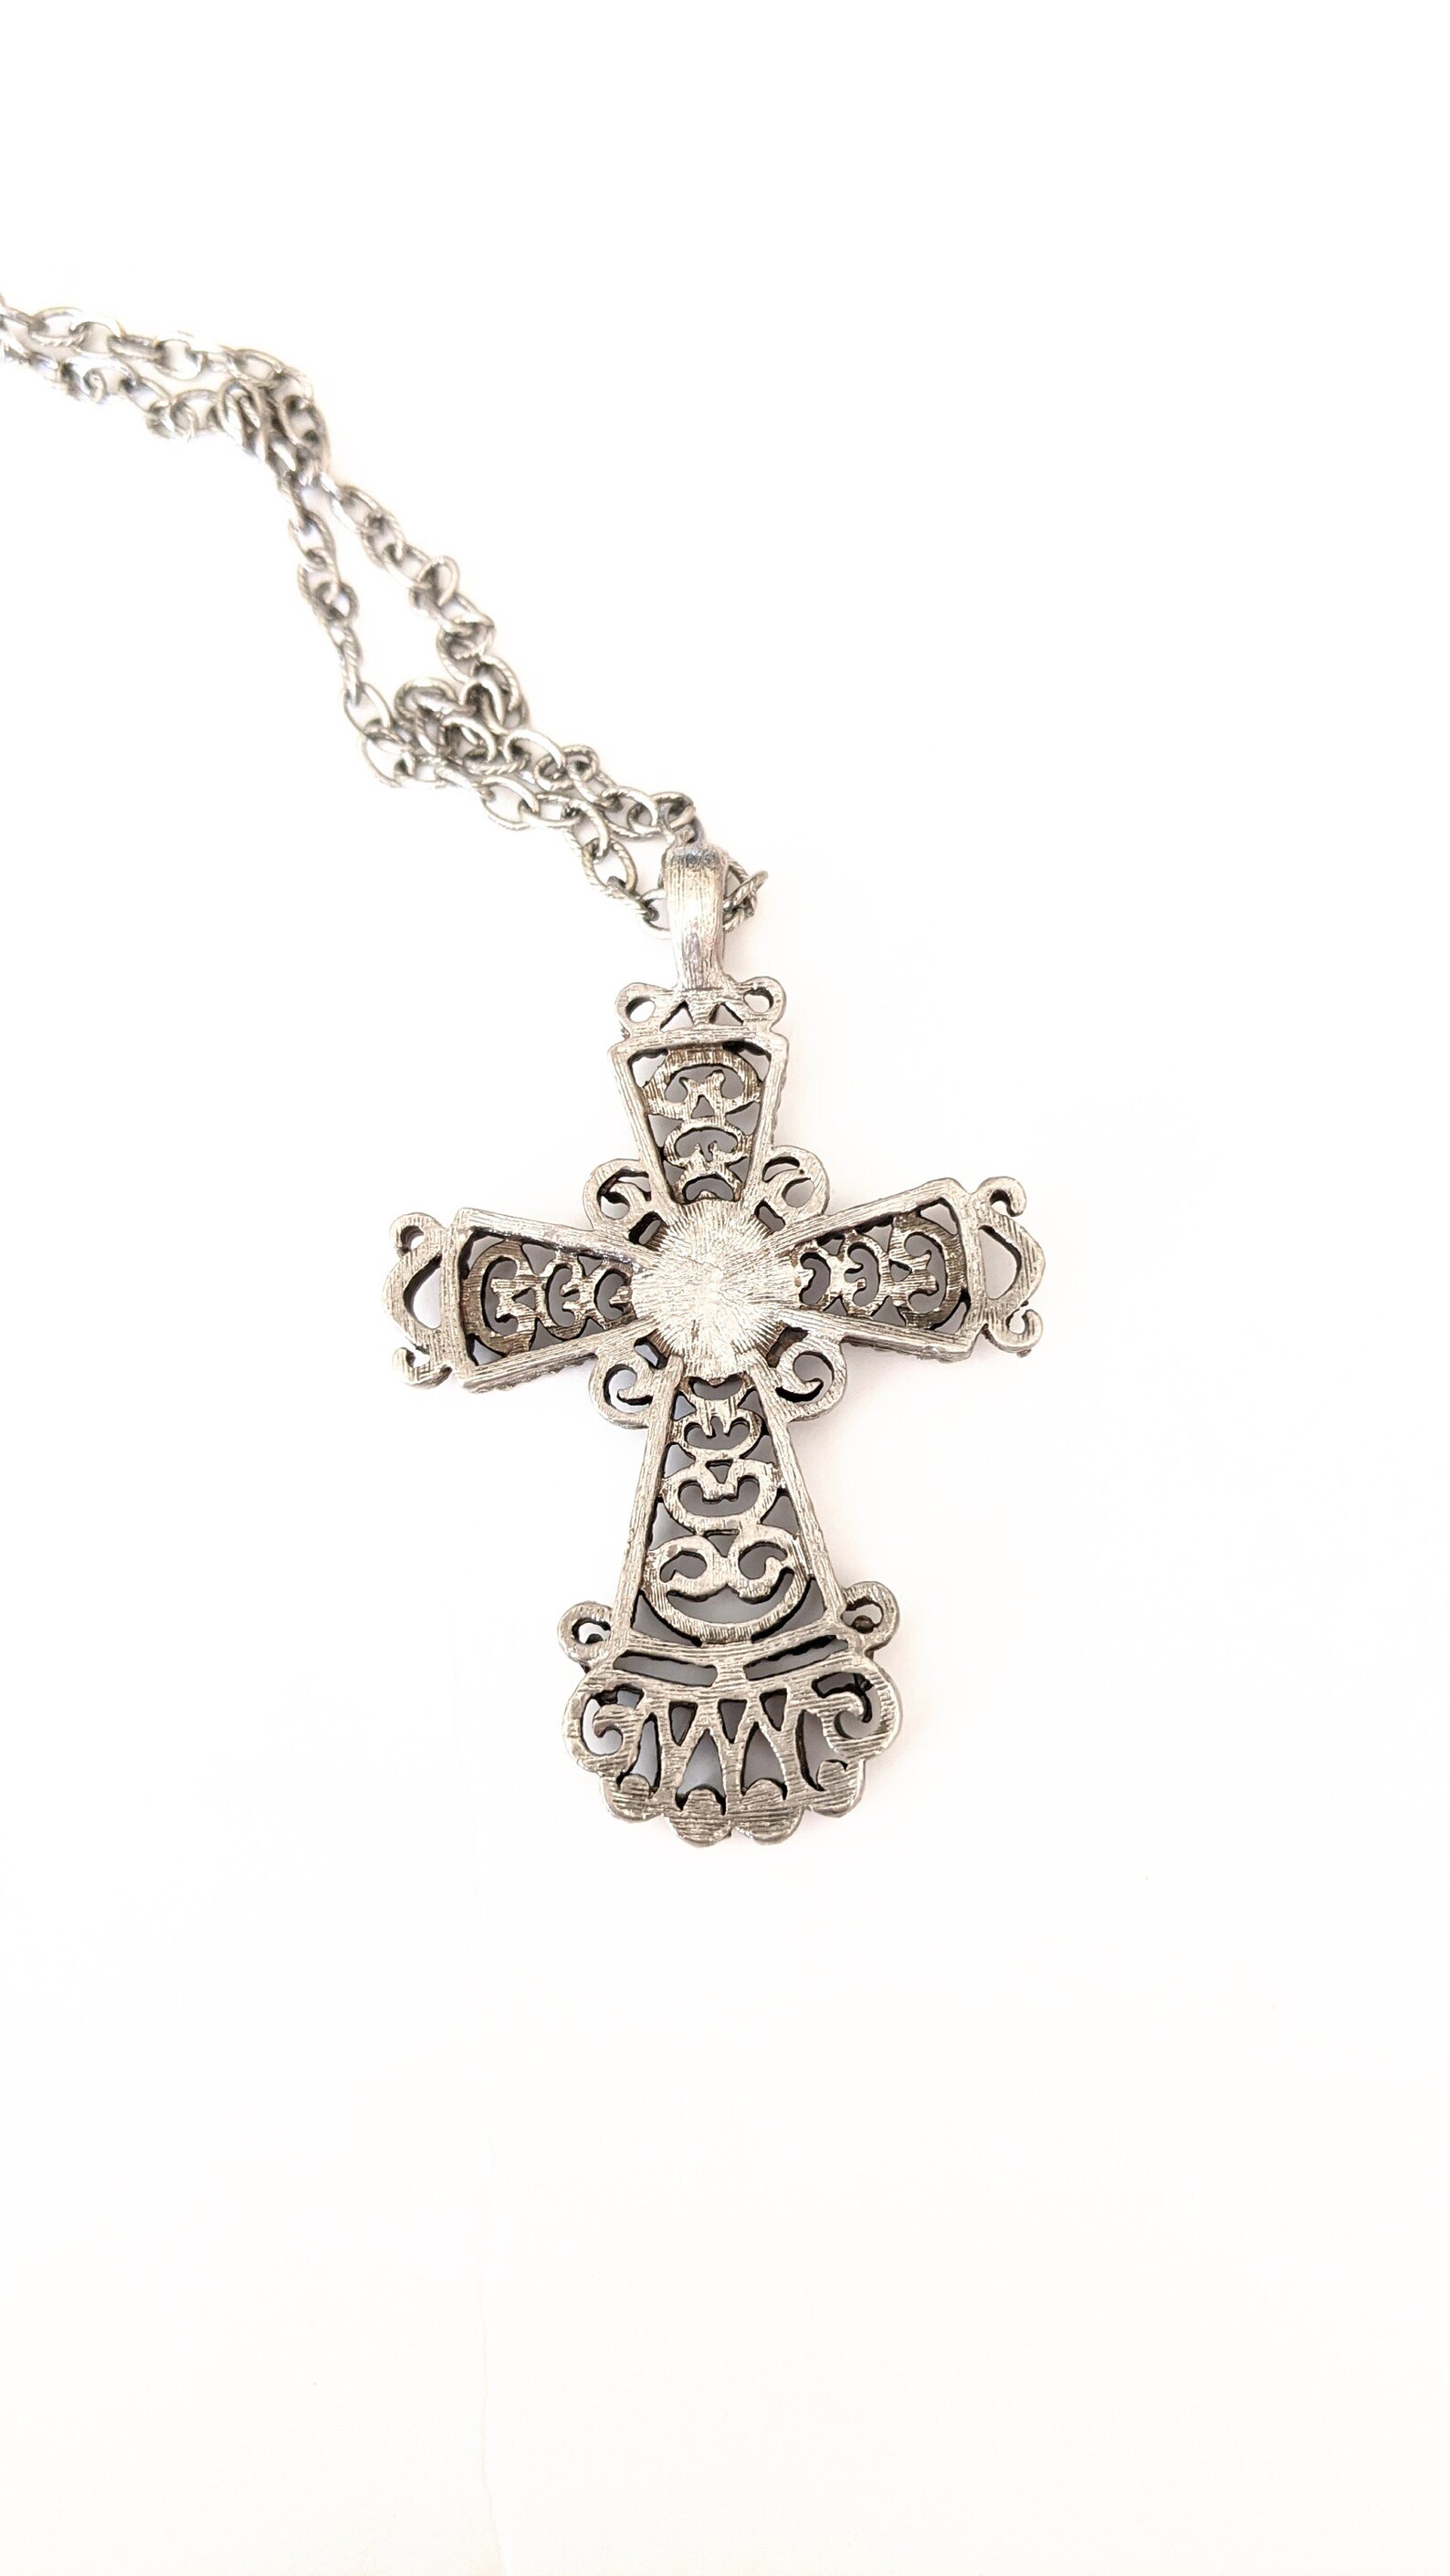 Vintage large gothic cross necklace pendant charm silver tone | Etsy